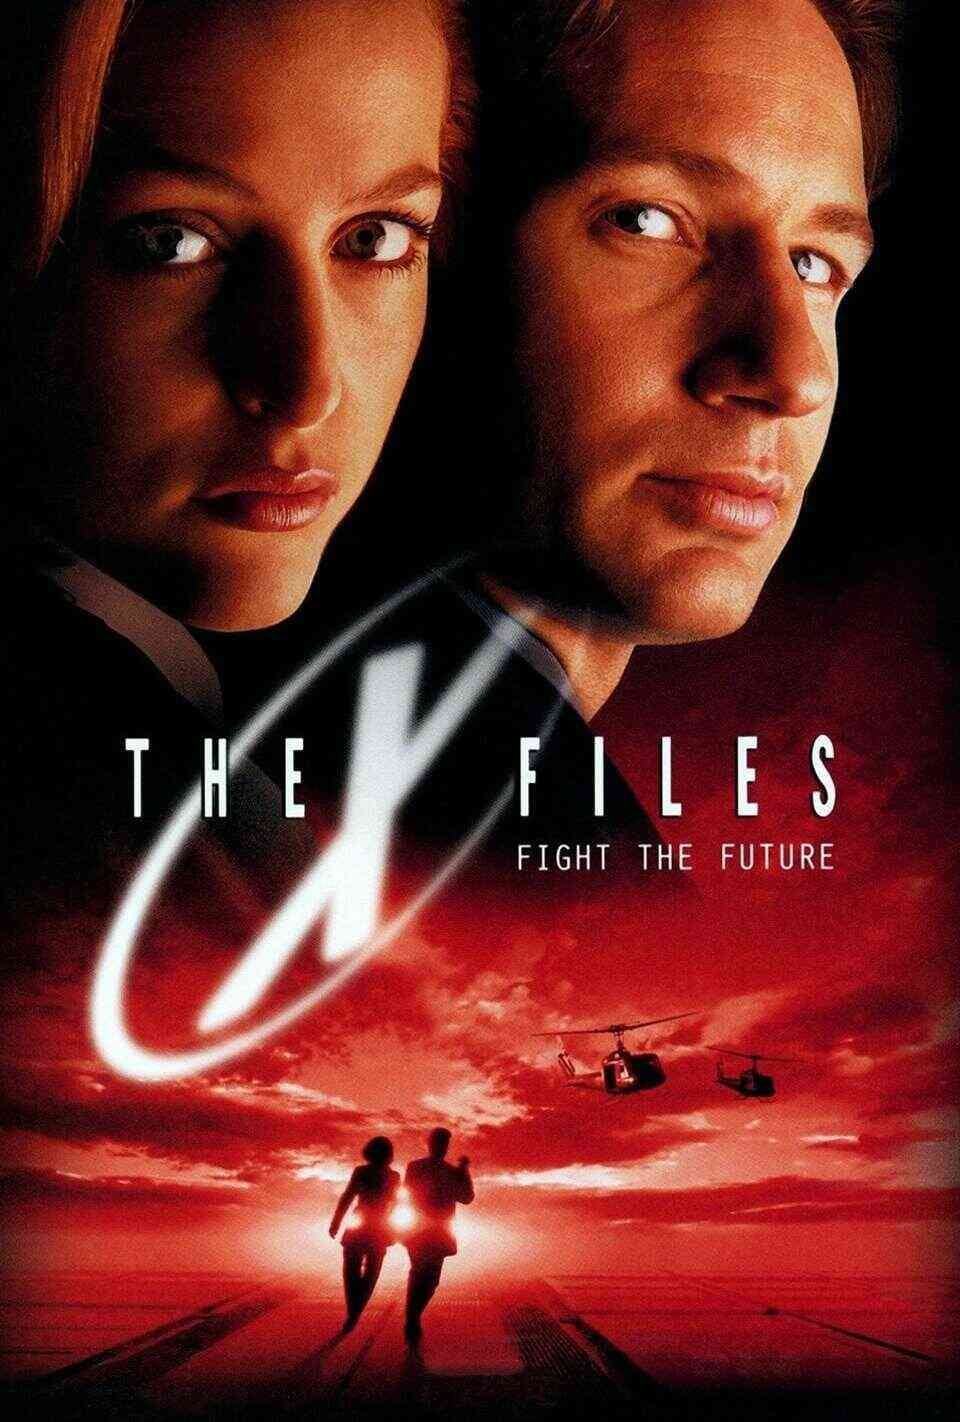 Read The X-Files (1998) screenplay.